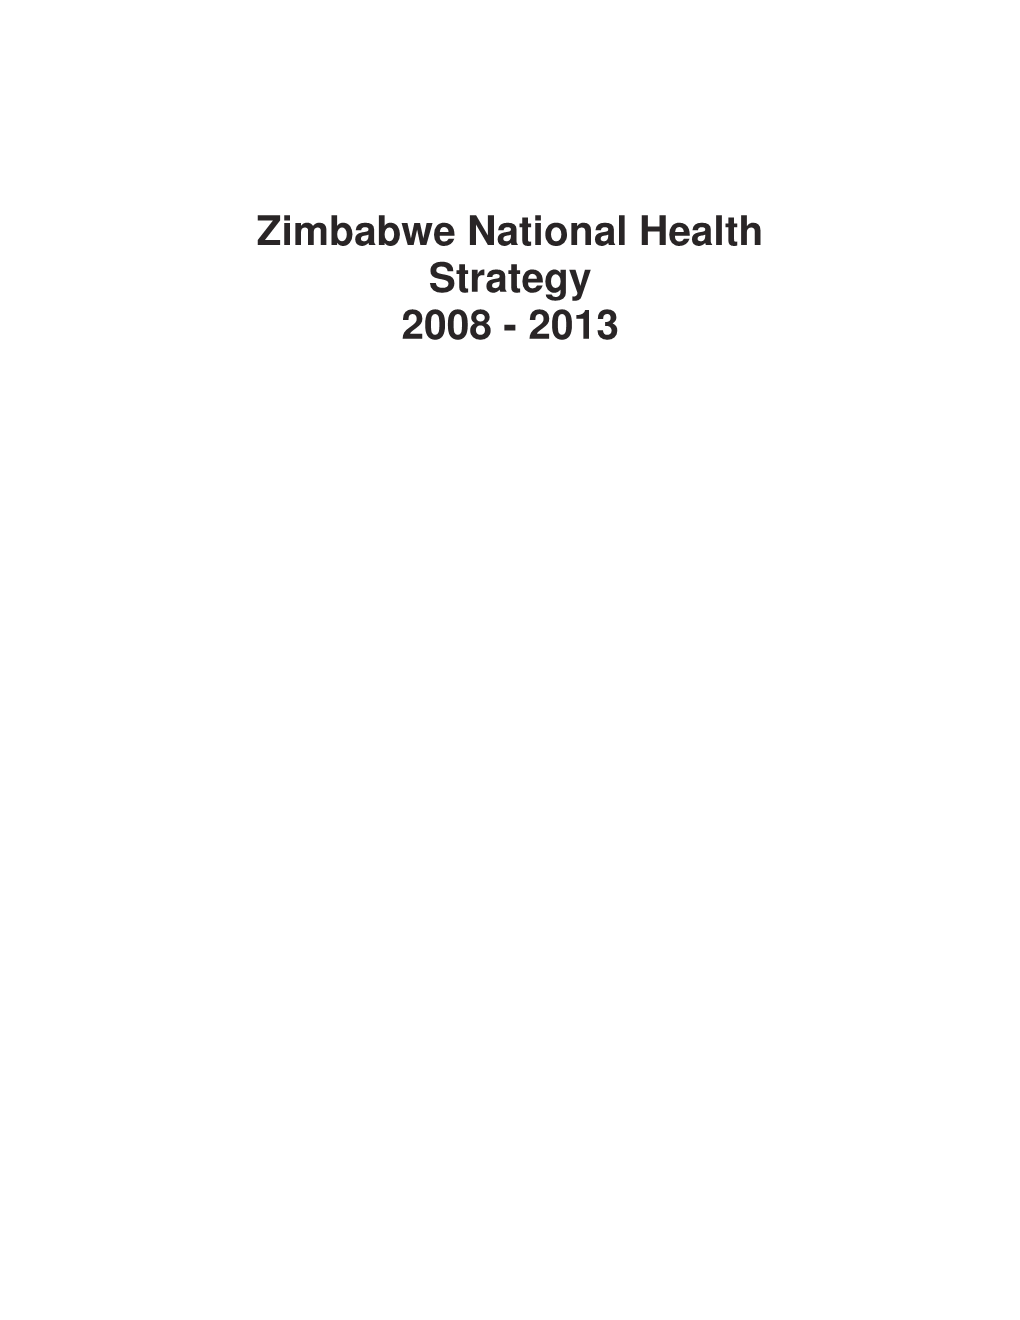 Zimbabwe National Health Strategy 2008 - 2013